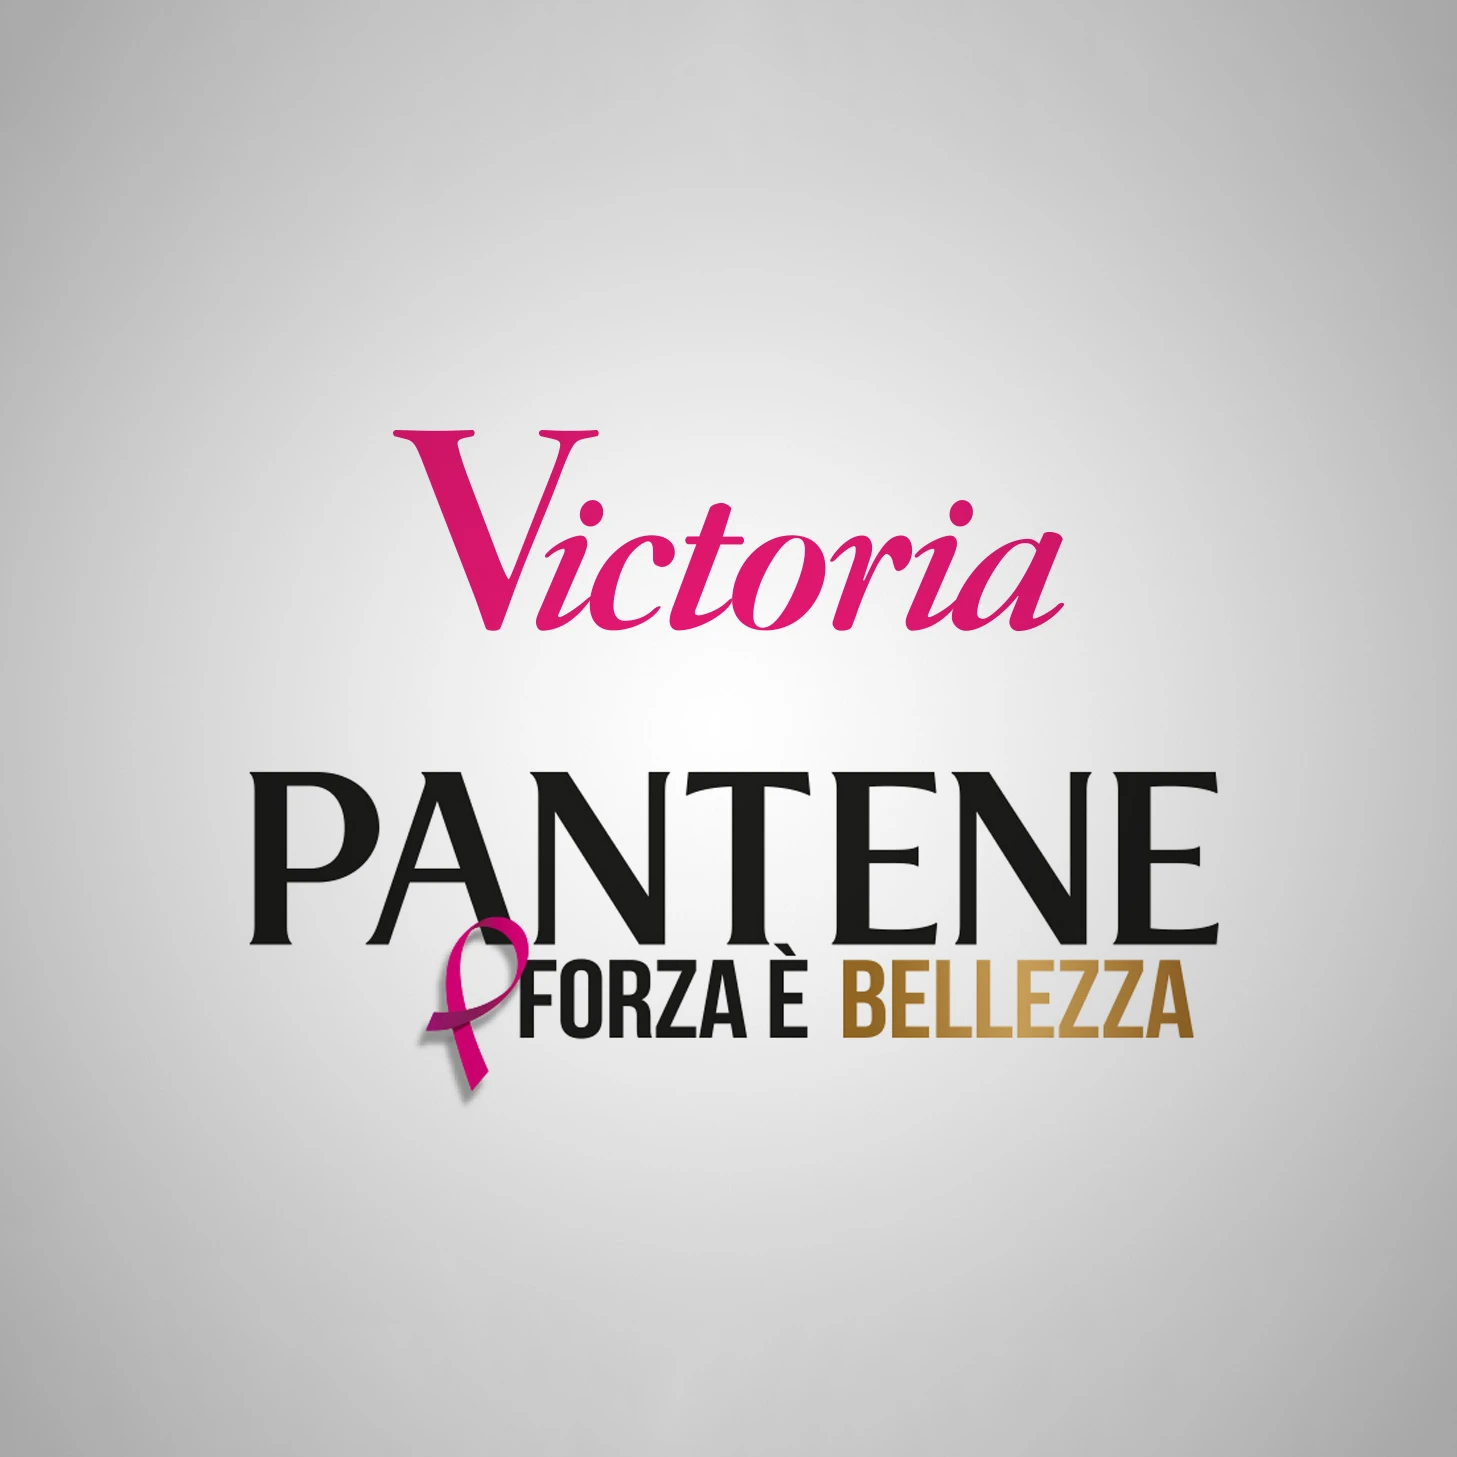 Pantene Victoria